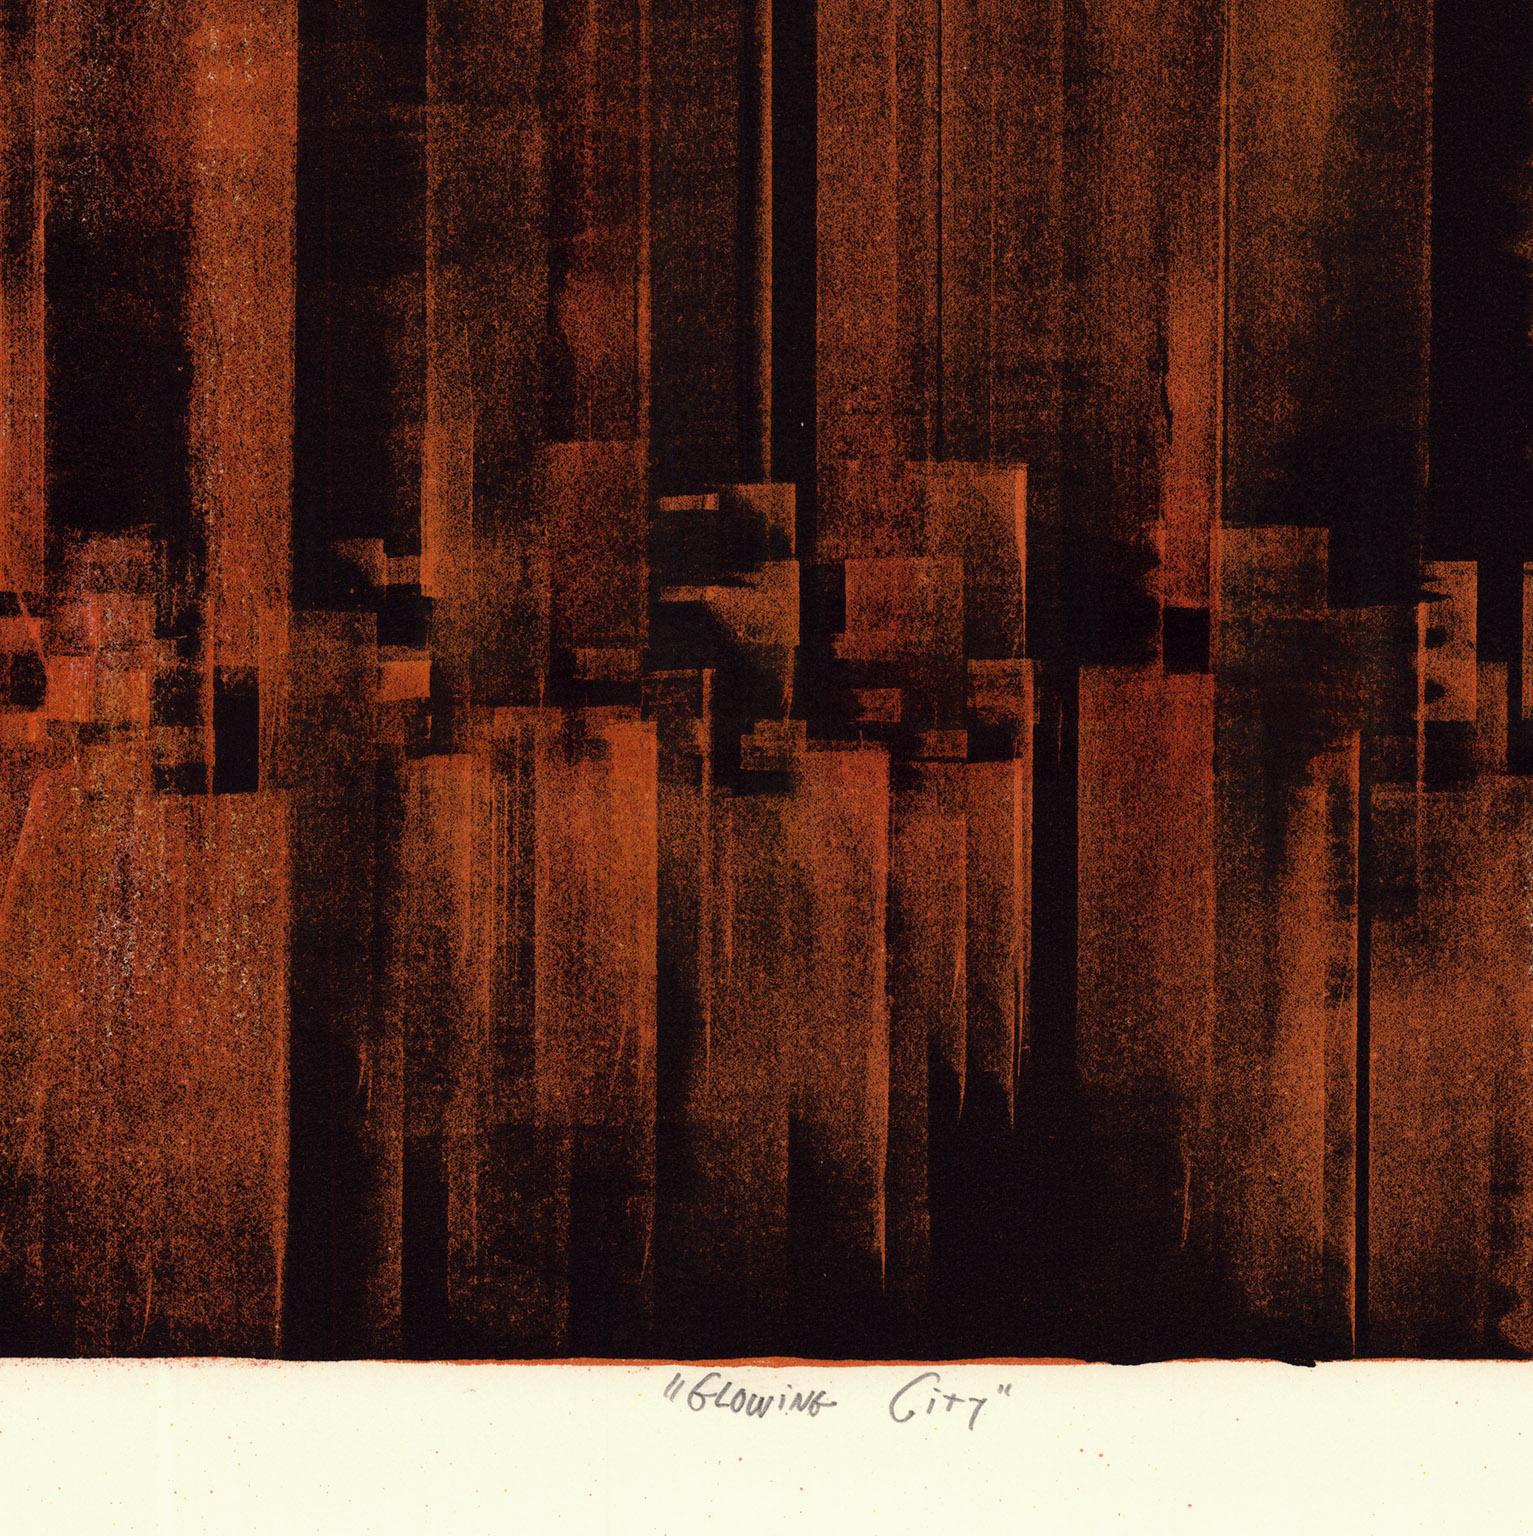 Glowing City - American Modern Print by Richard Florsheim